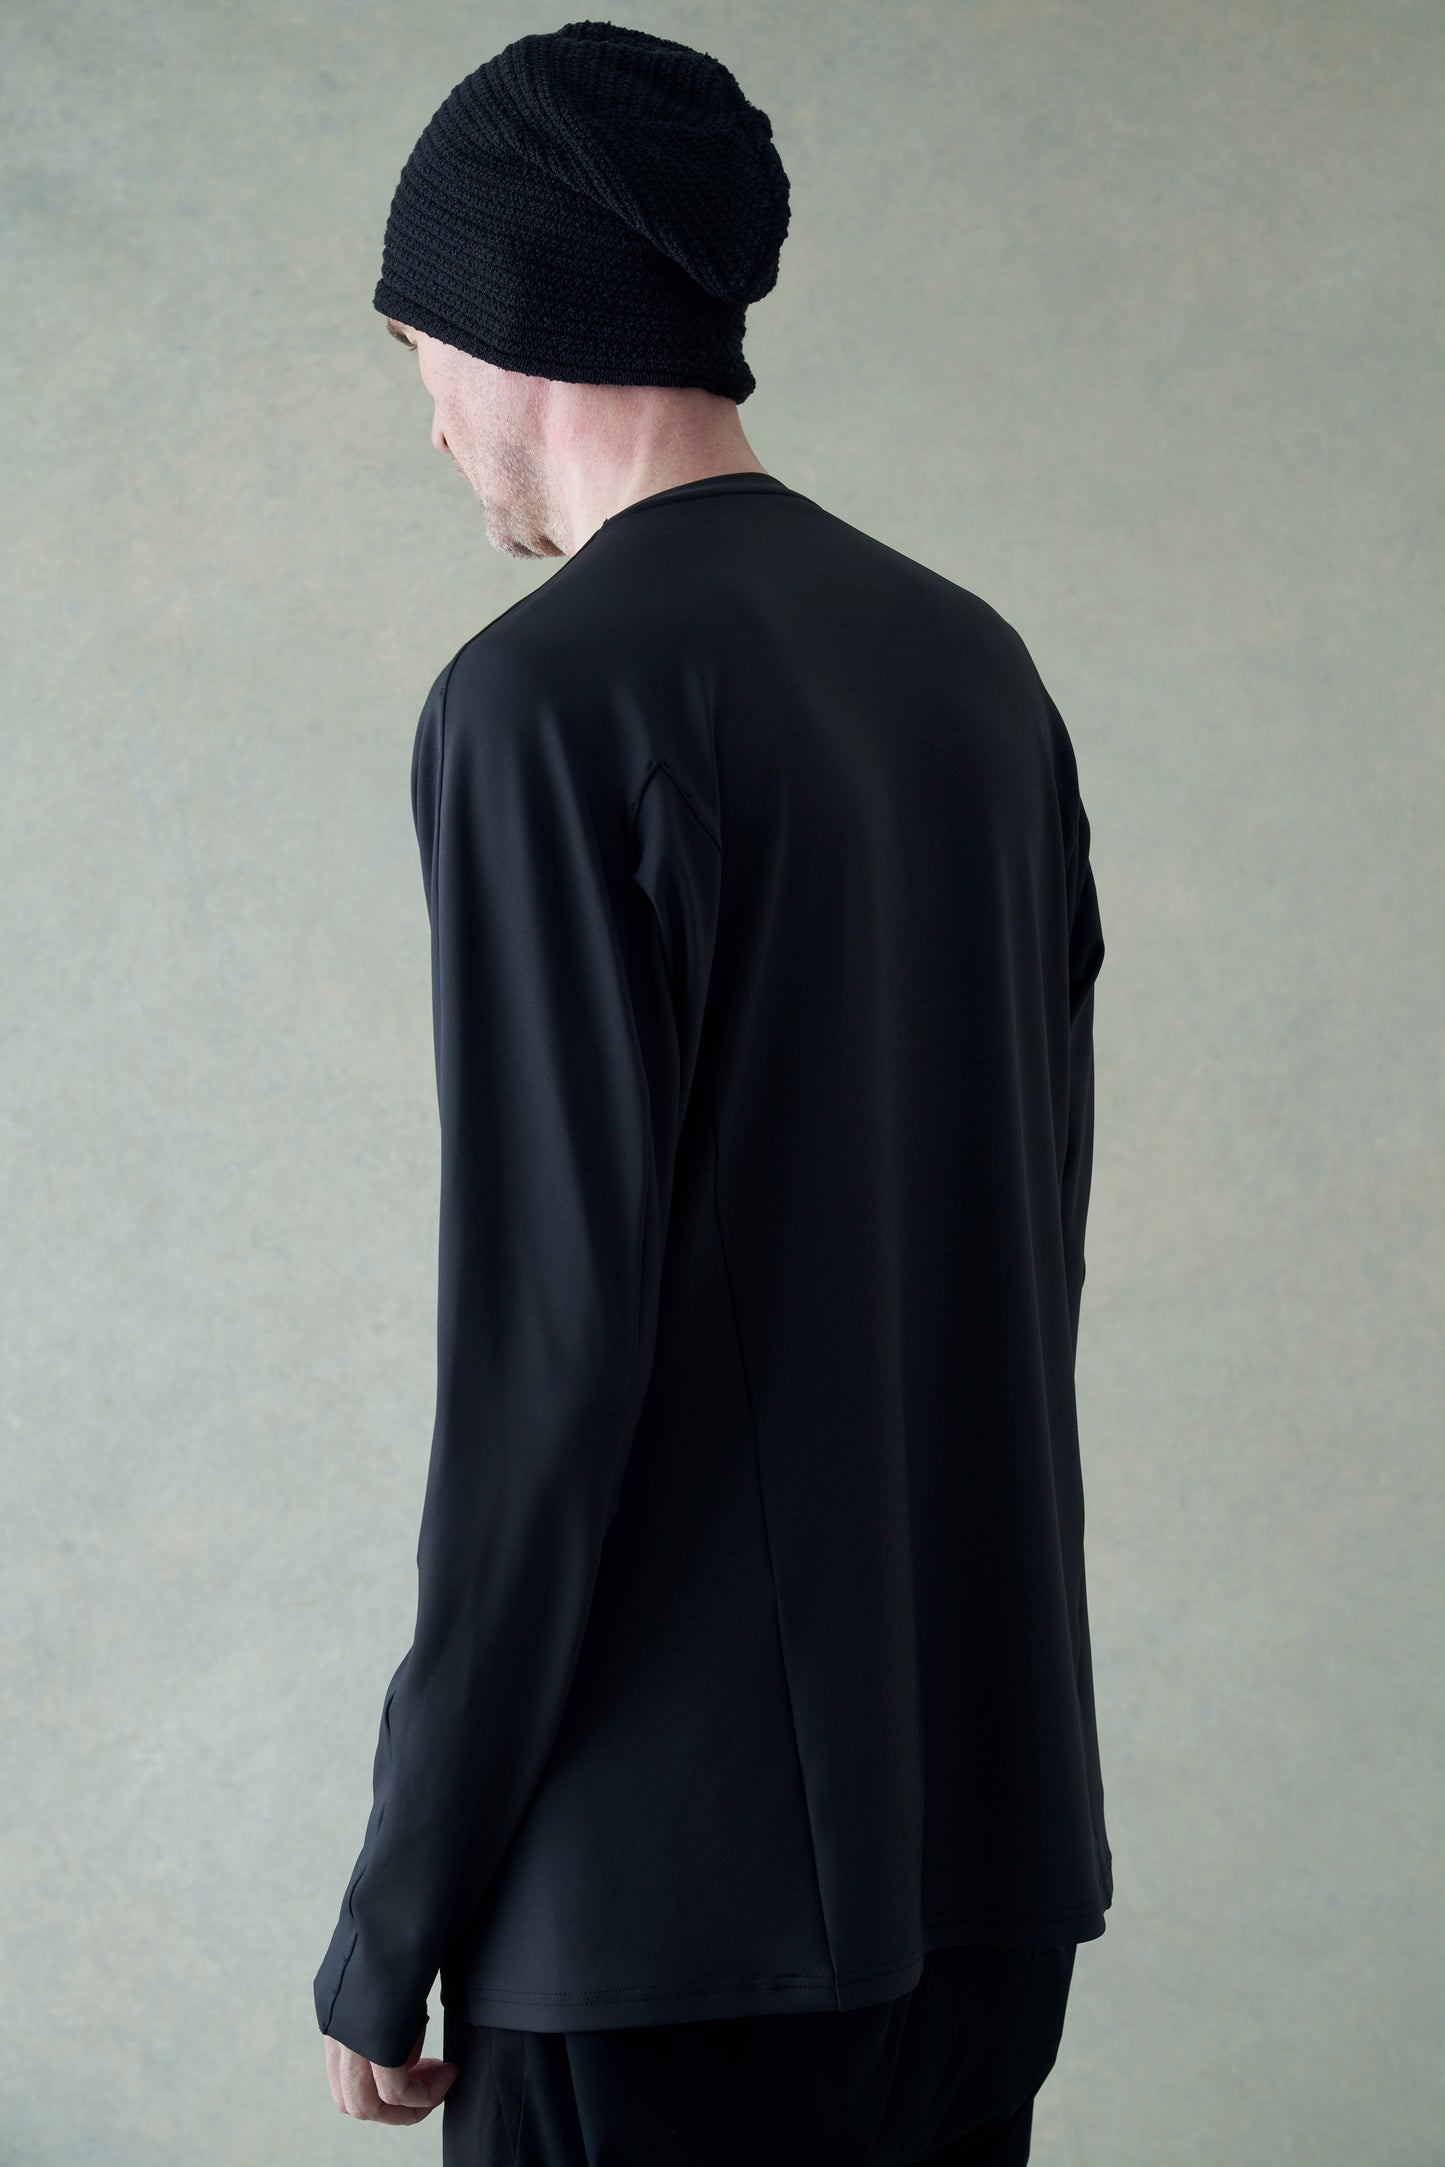 Graphite Long Sleeve Hybrid Yarn Jersey T-shirt